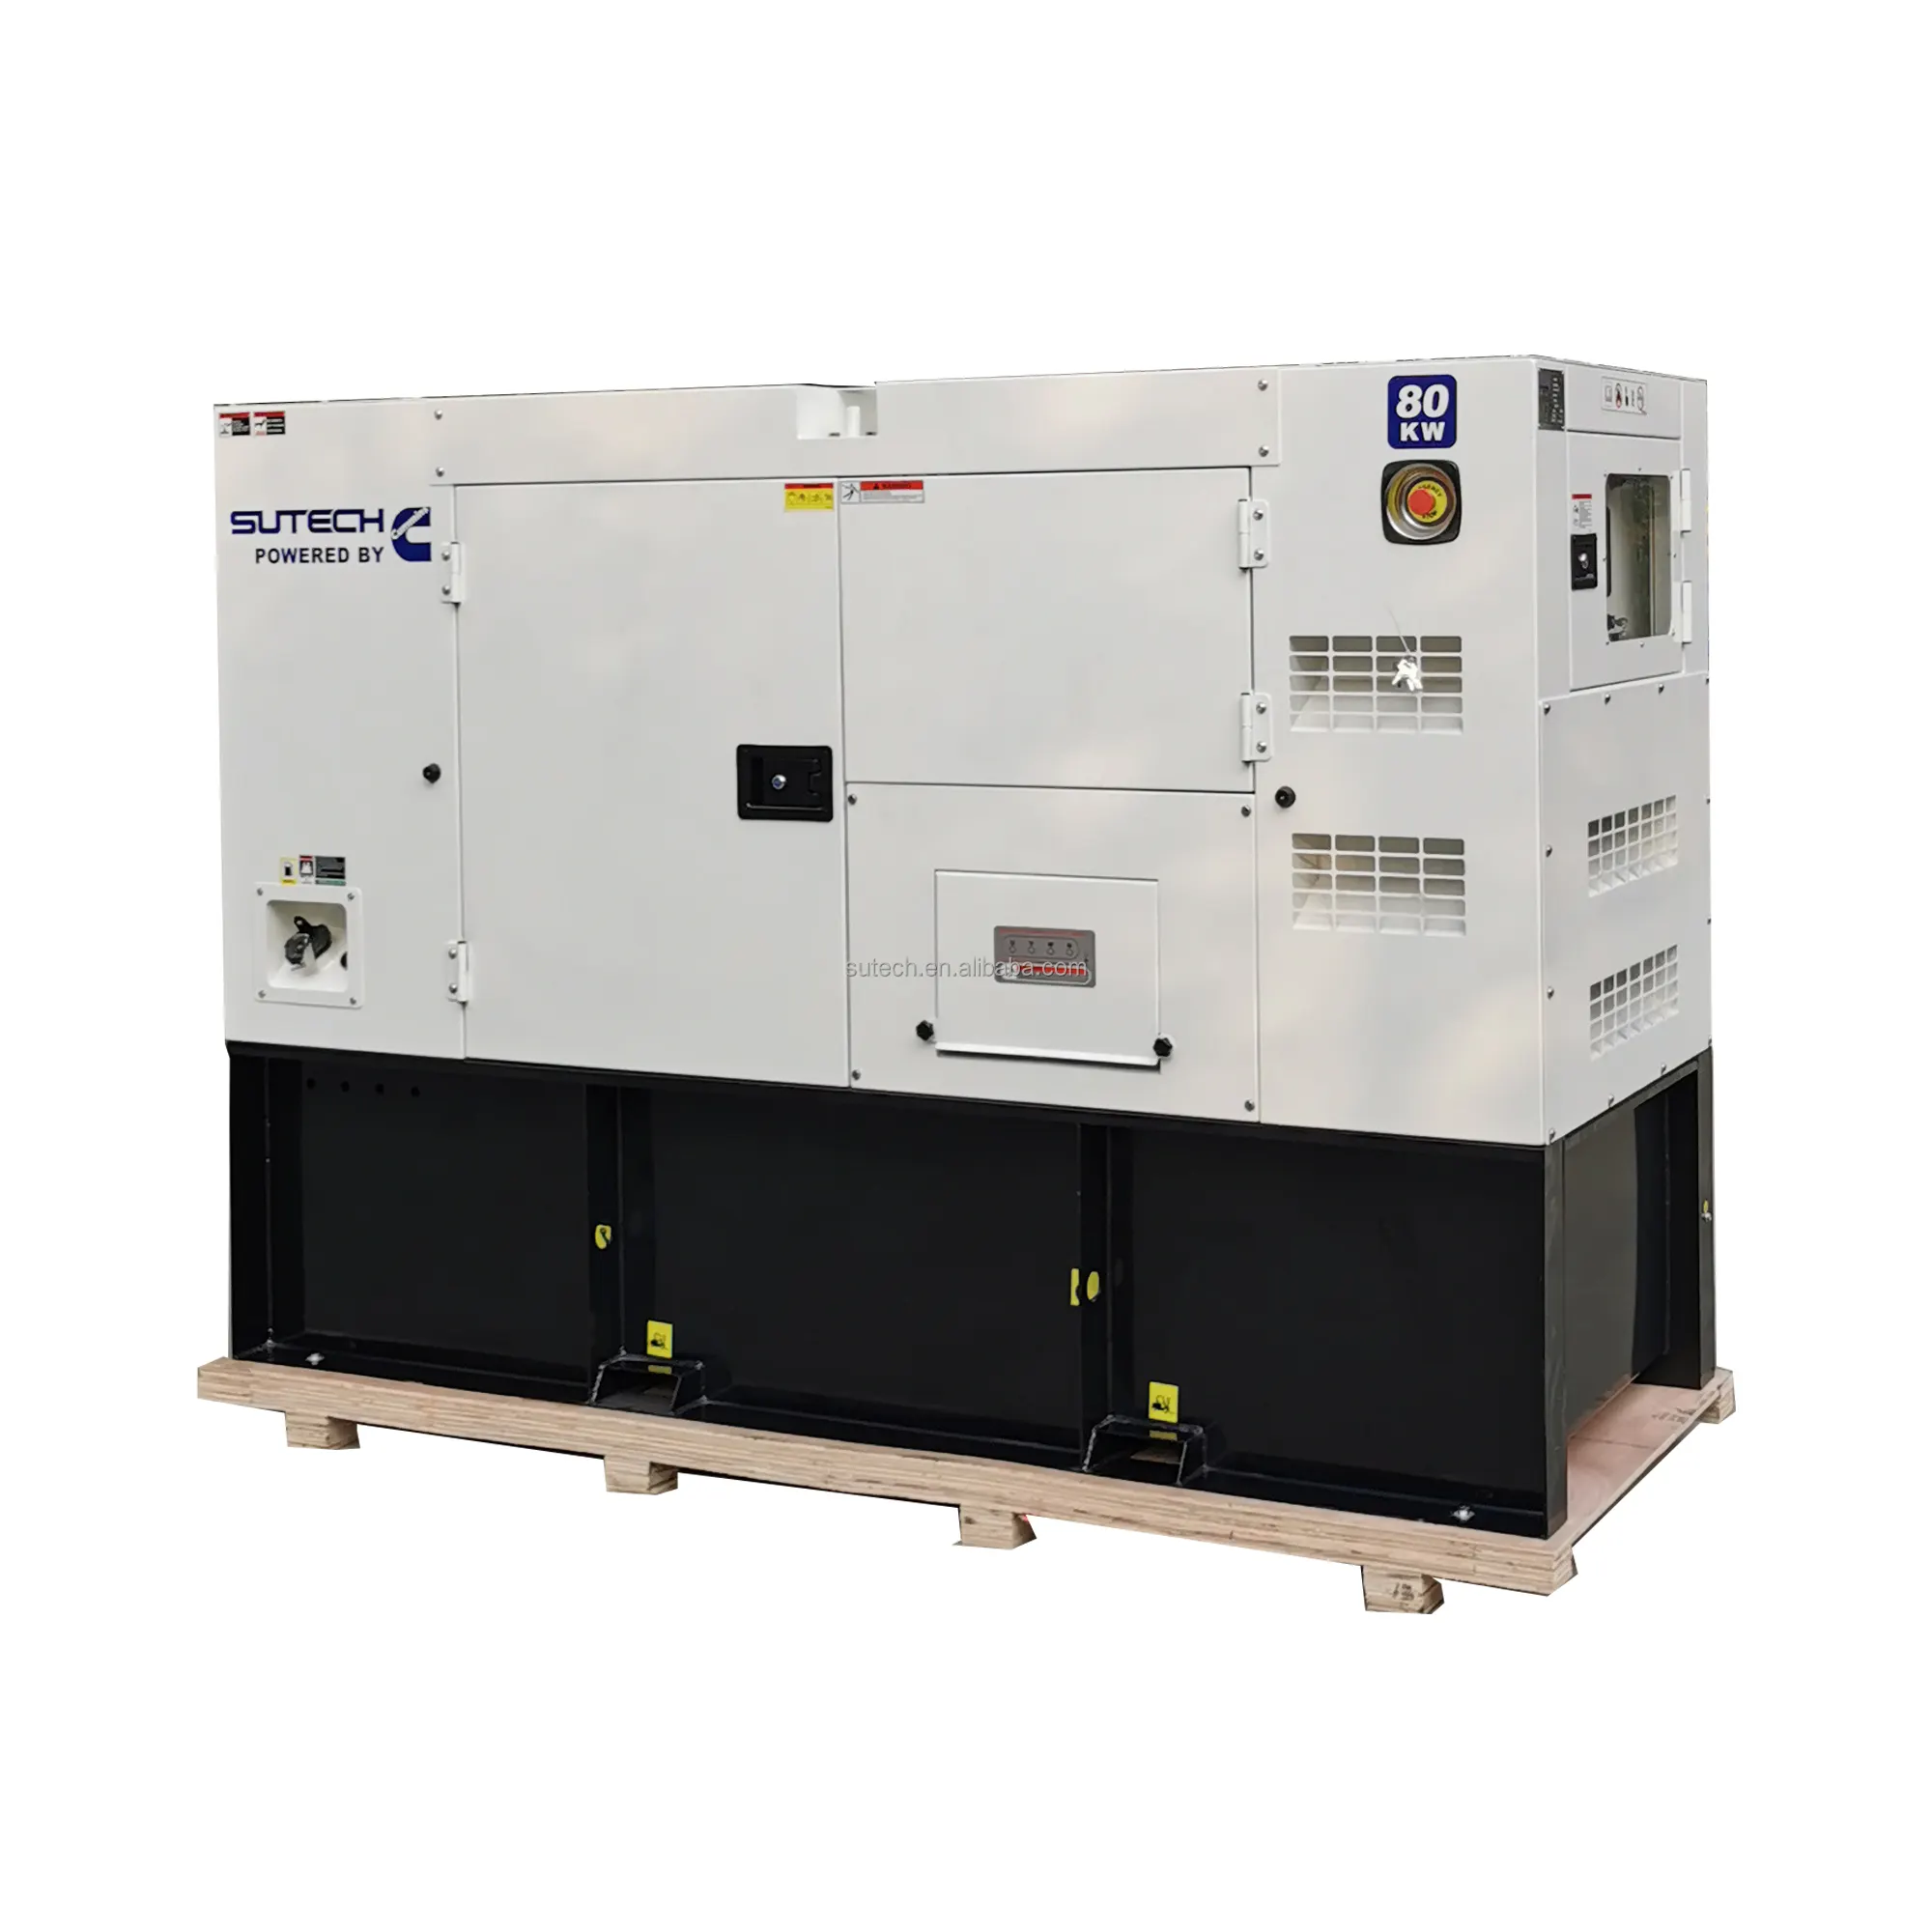 dynamo silent 100HP diesel generators 100 hp power by cummins motor 6BT5.9-G1 stamford alternator generator